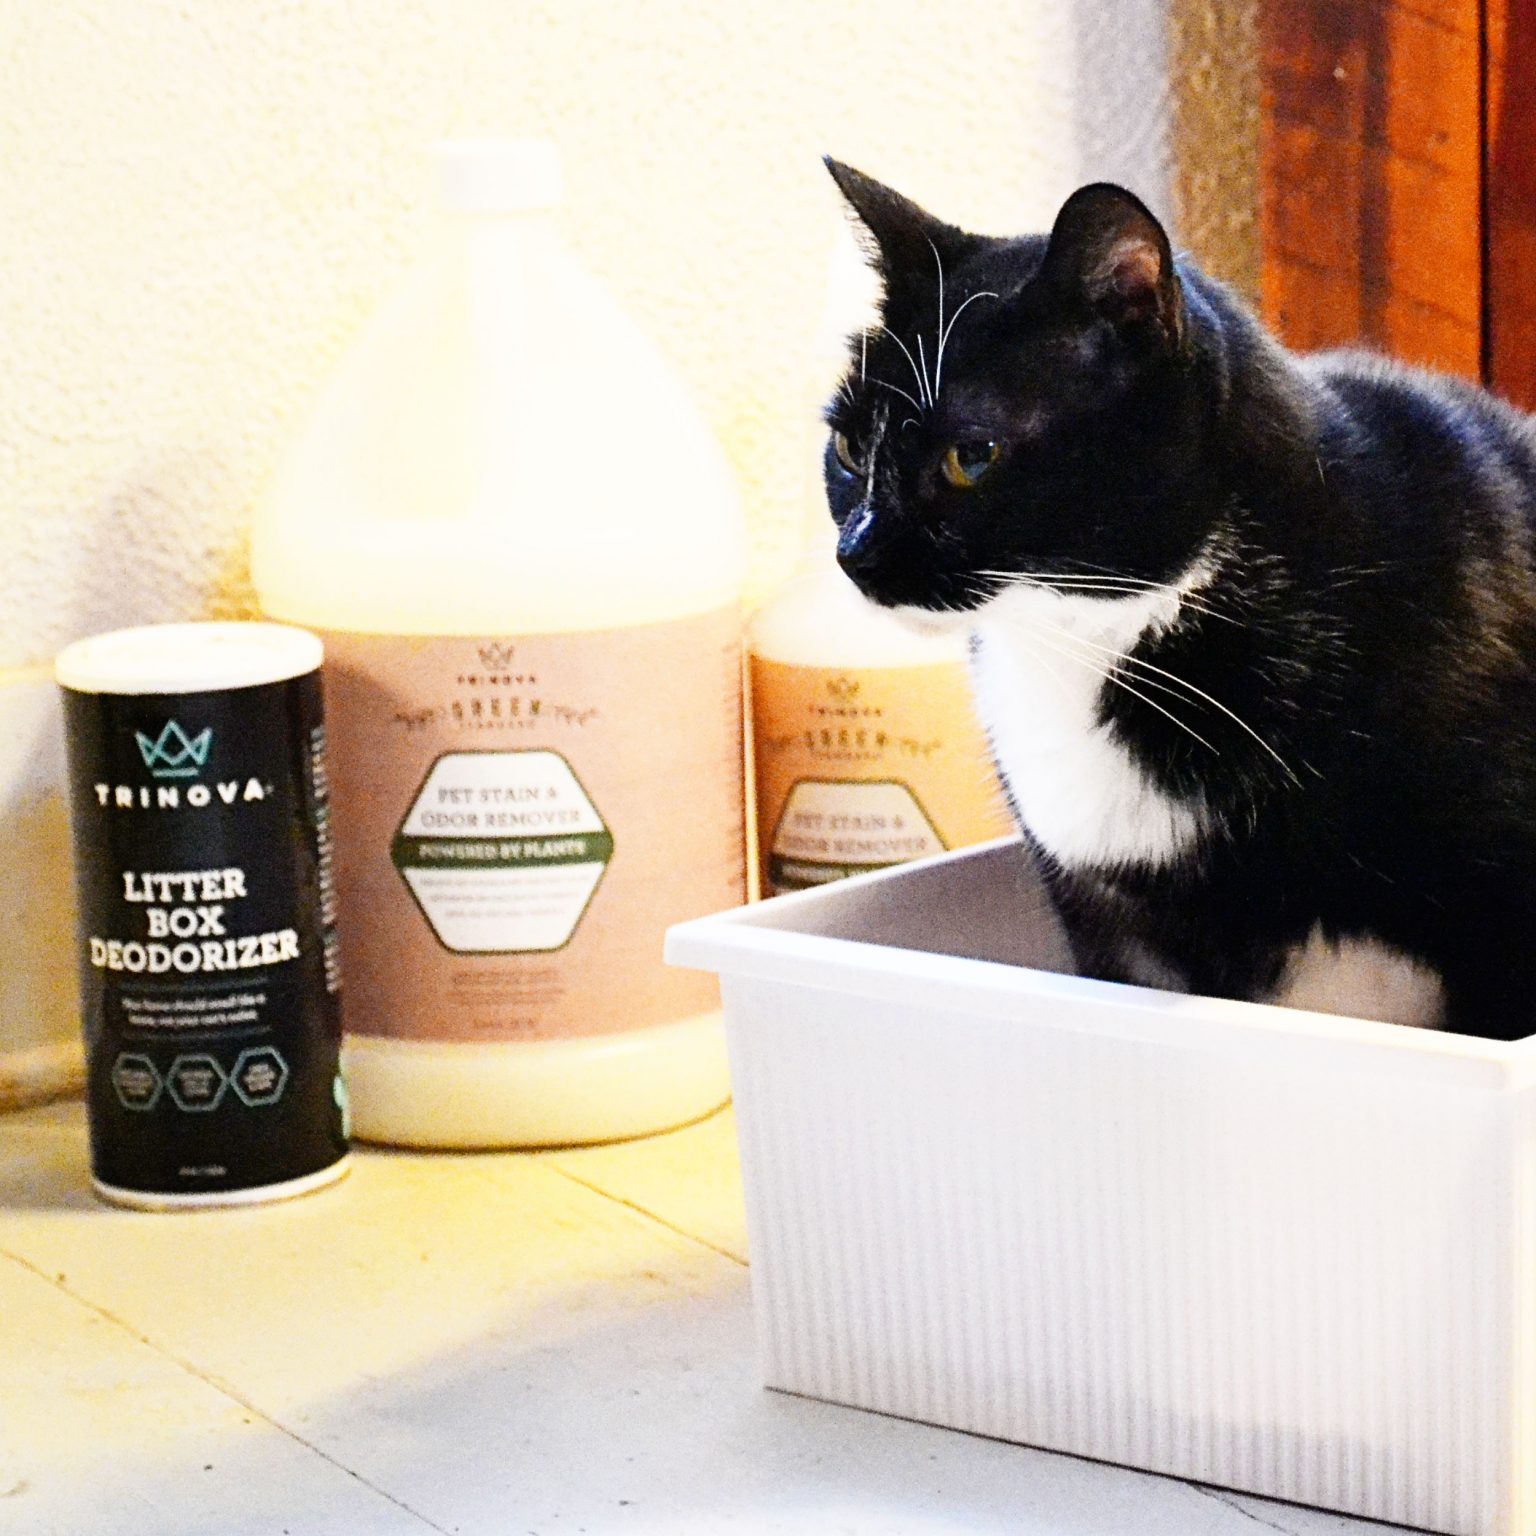 {ended} Win TriNova Cat Litter Box Deodorizer + Natural Pet Stain